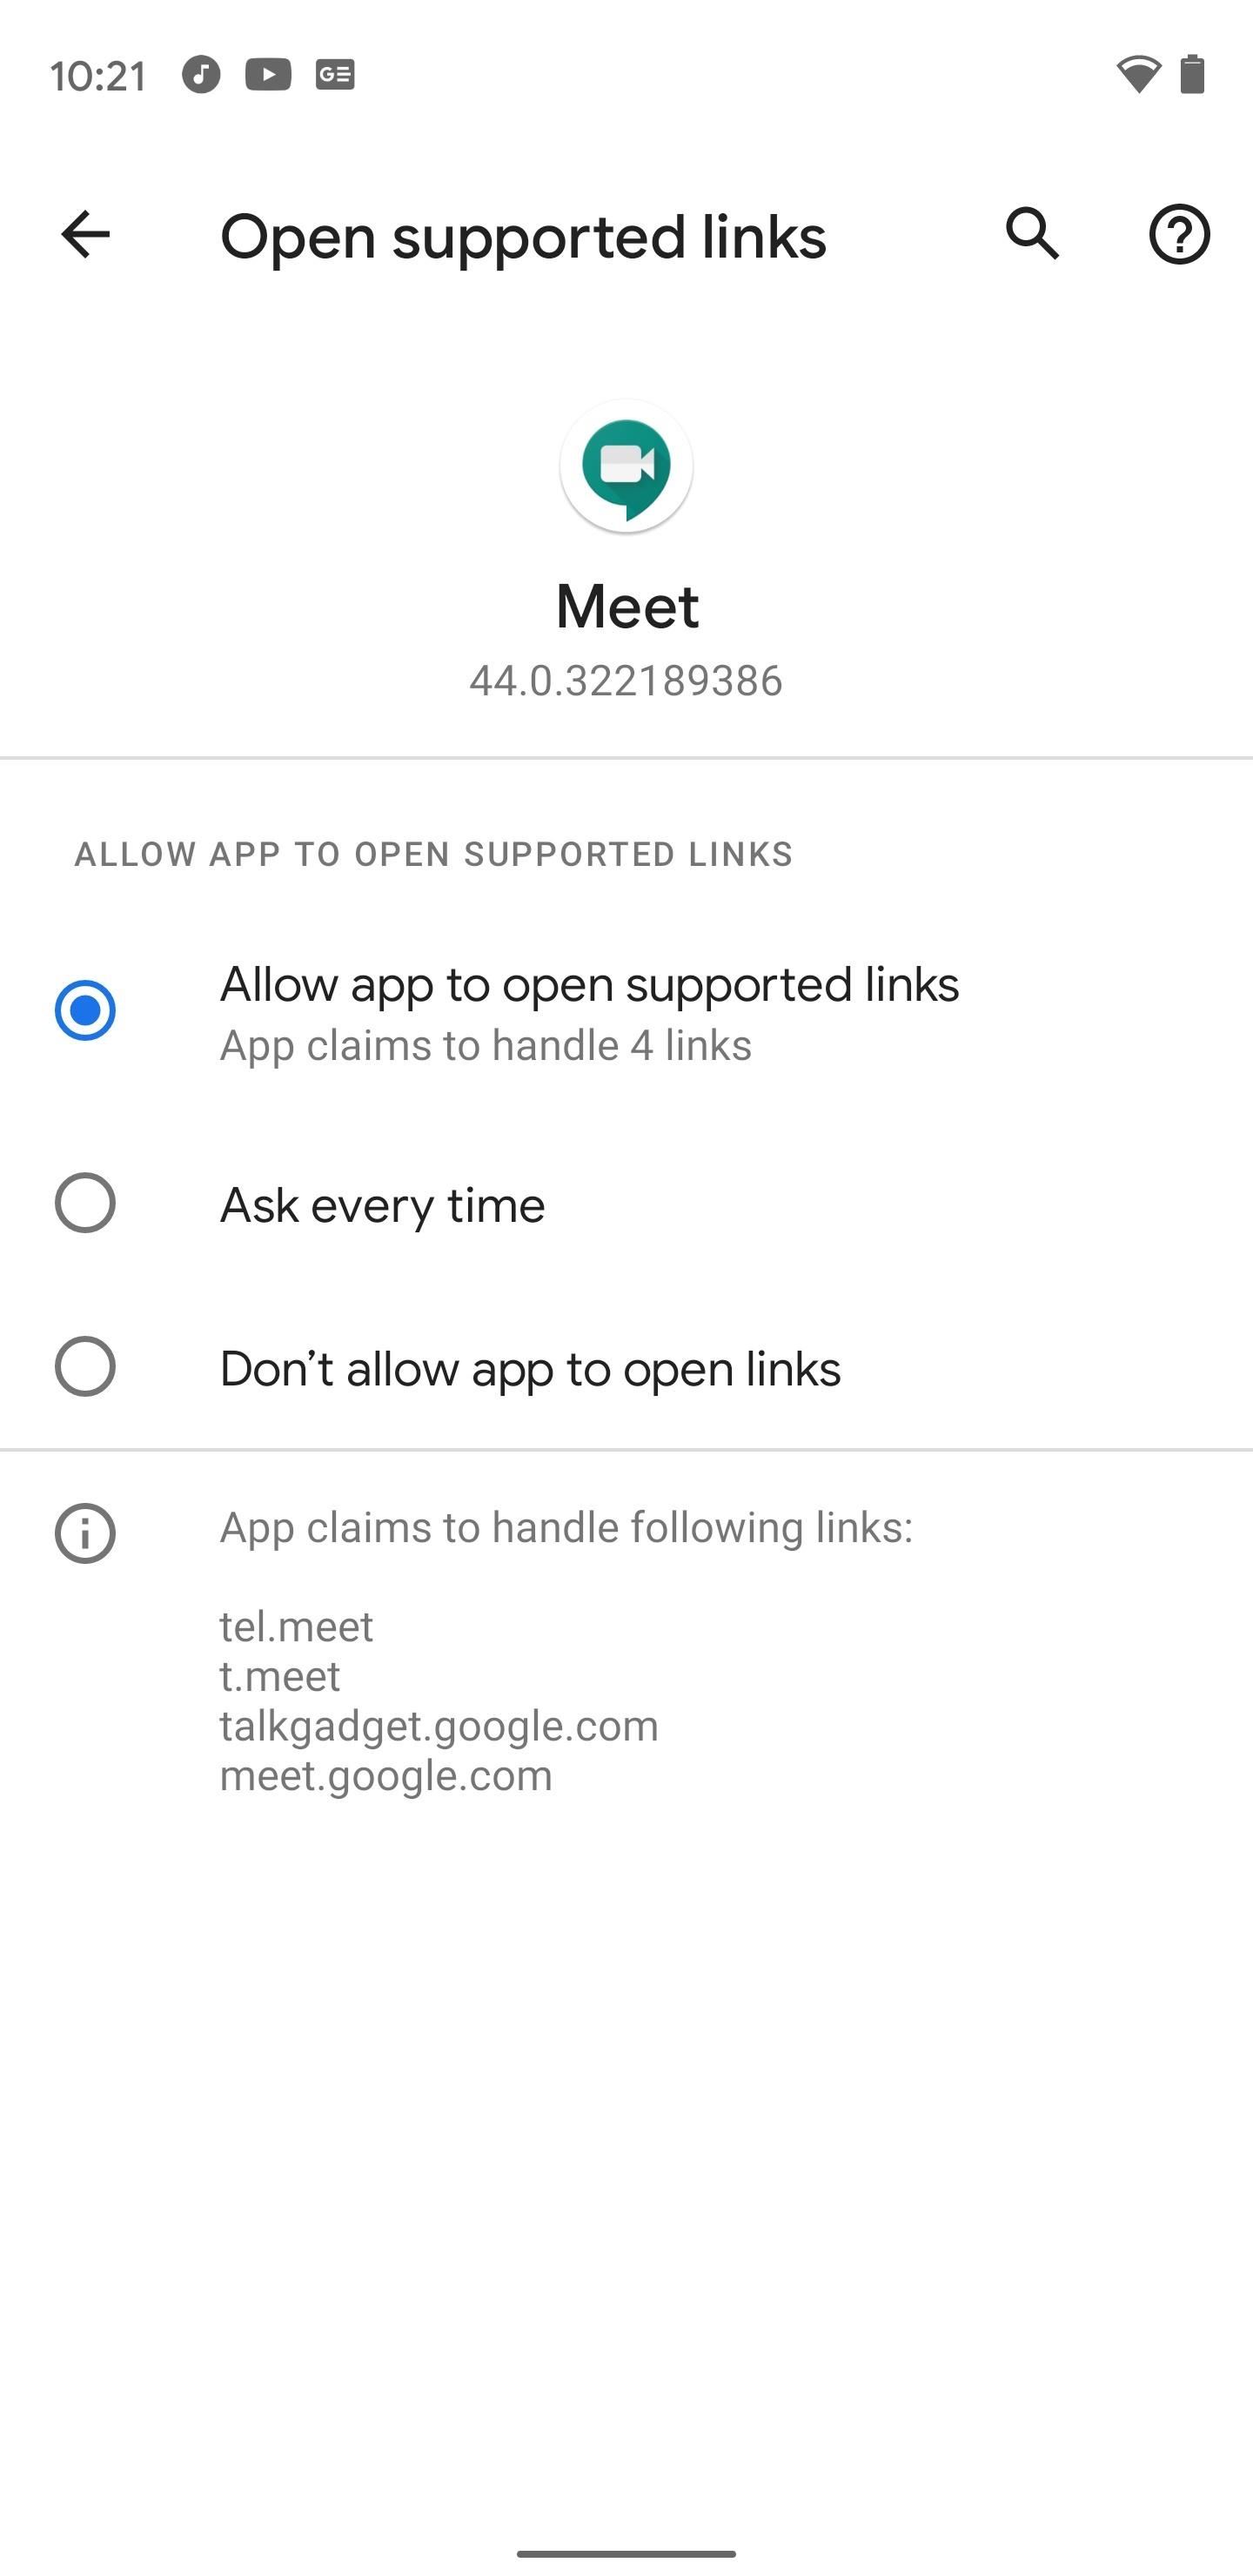 How to Make Google Calendar Open Meeting Links in Google Meet Instead of the Gmail App